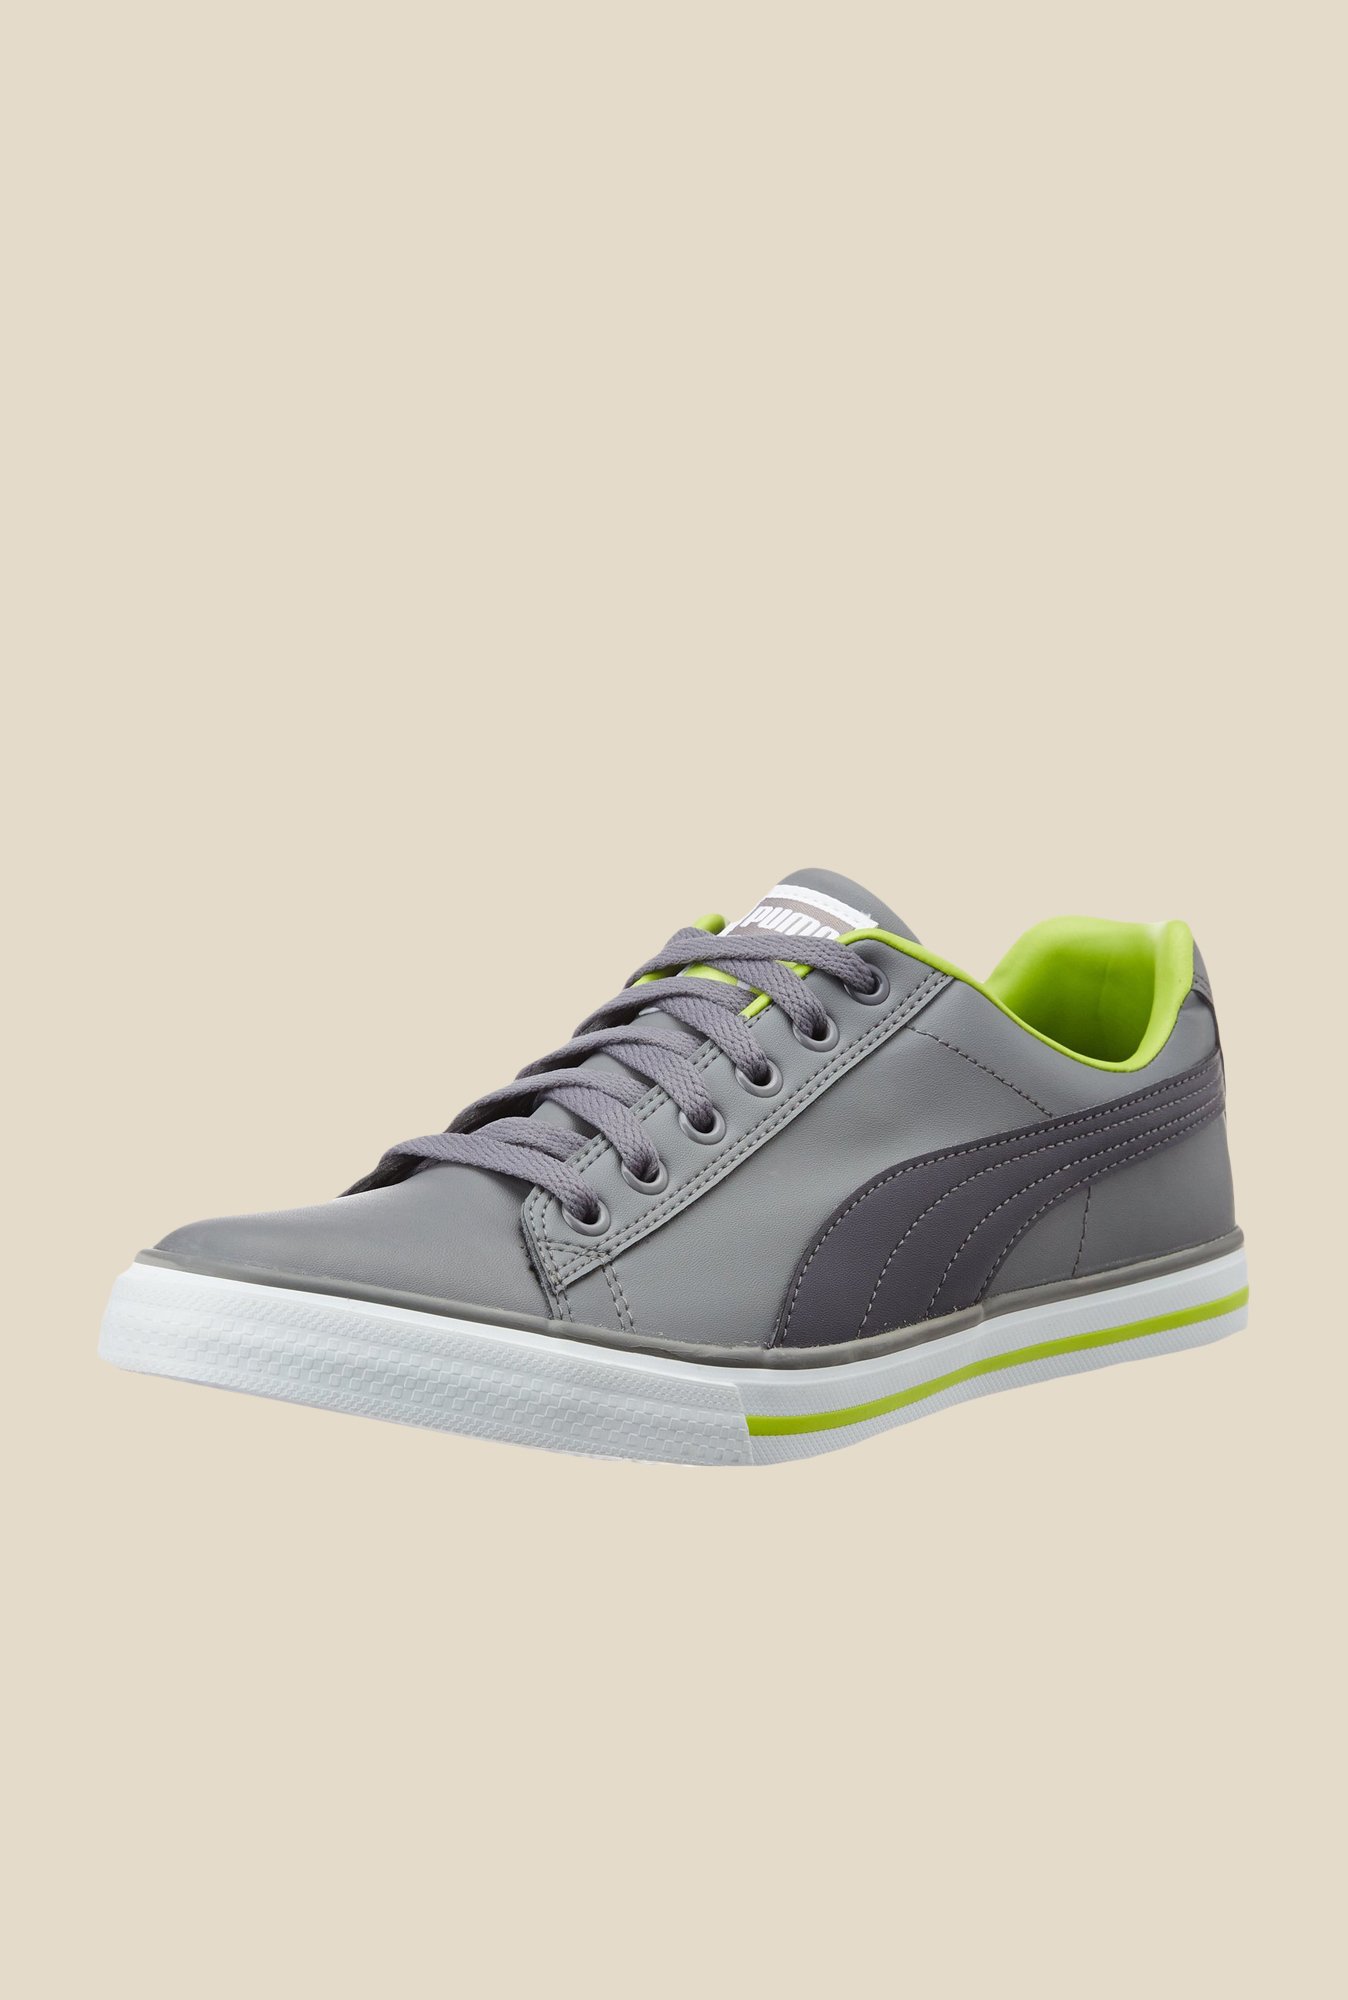 Puma Salz III IDP Grey \u0026 Green Sneakers 